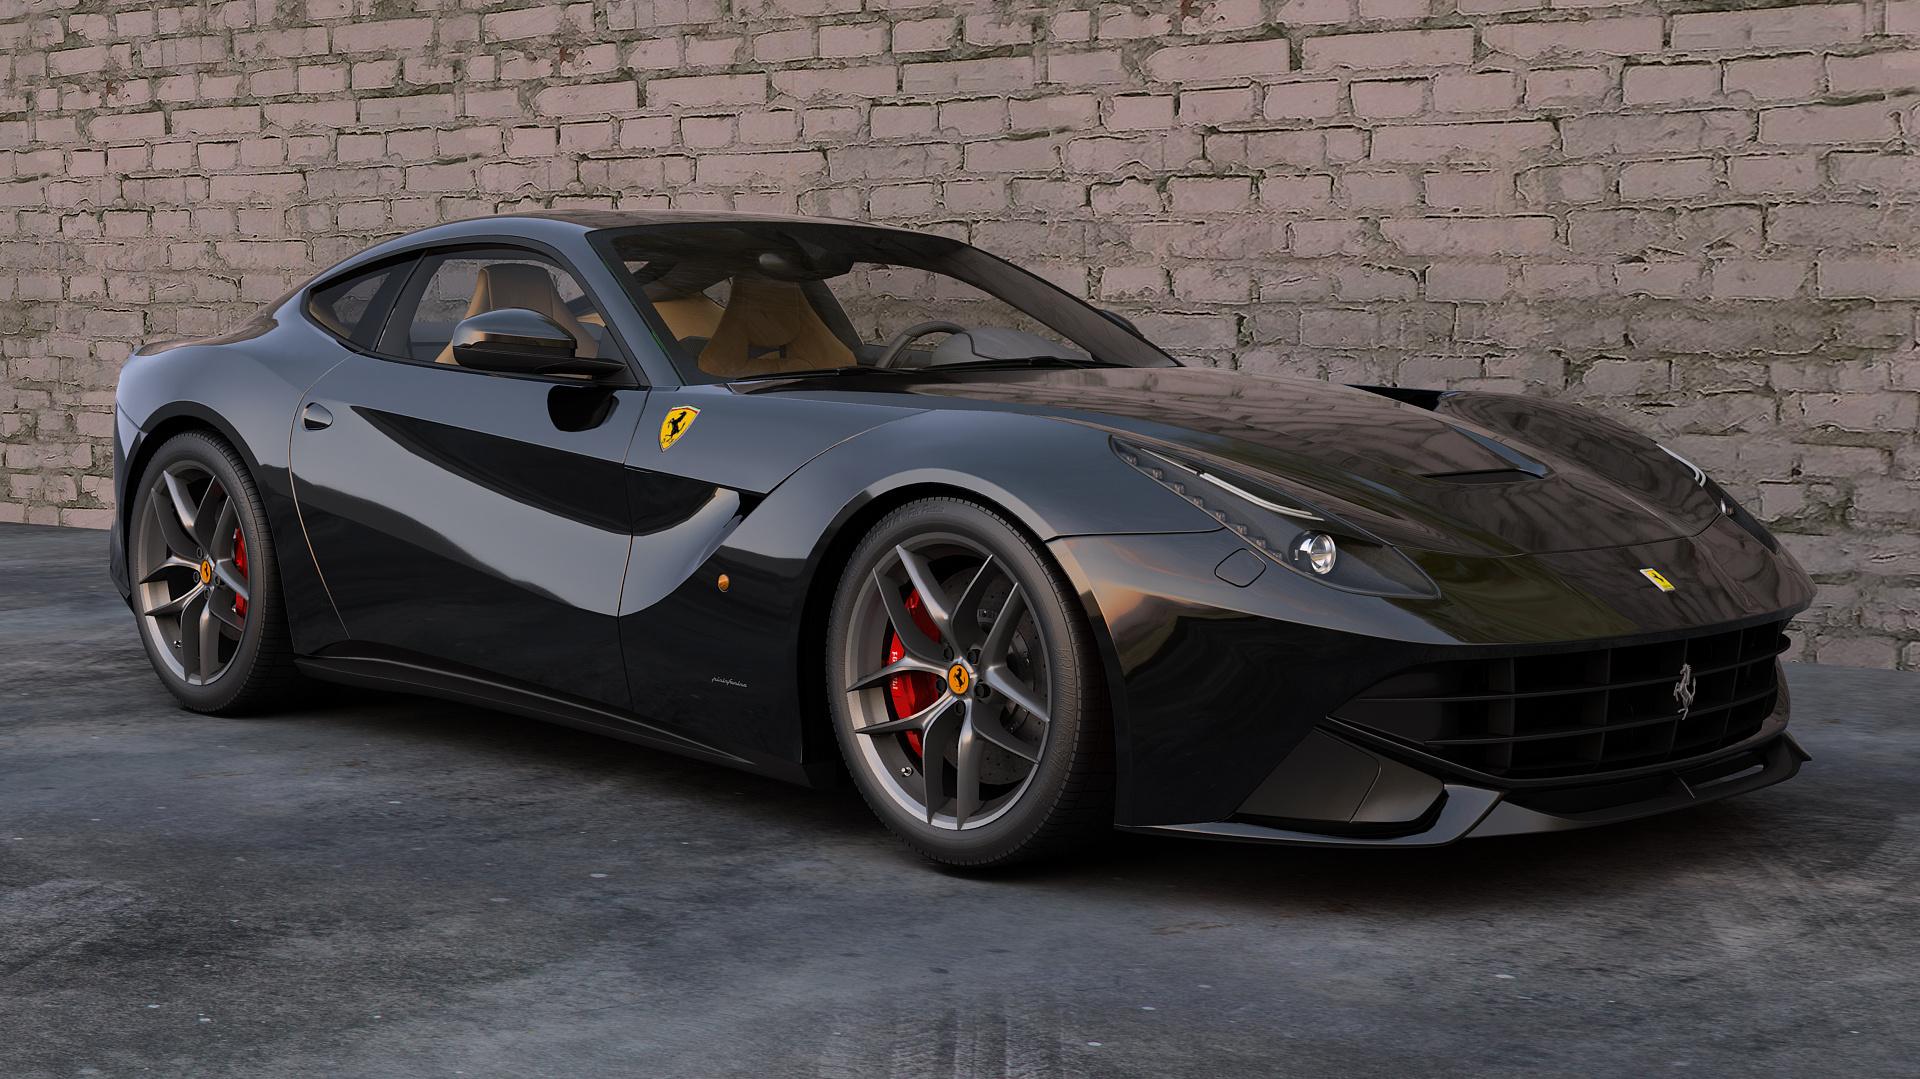 Ferrari F12berlita HD Wallpaper And Background